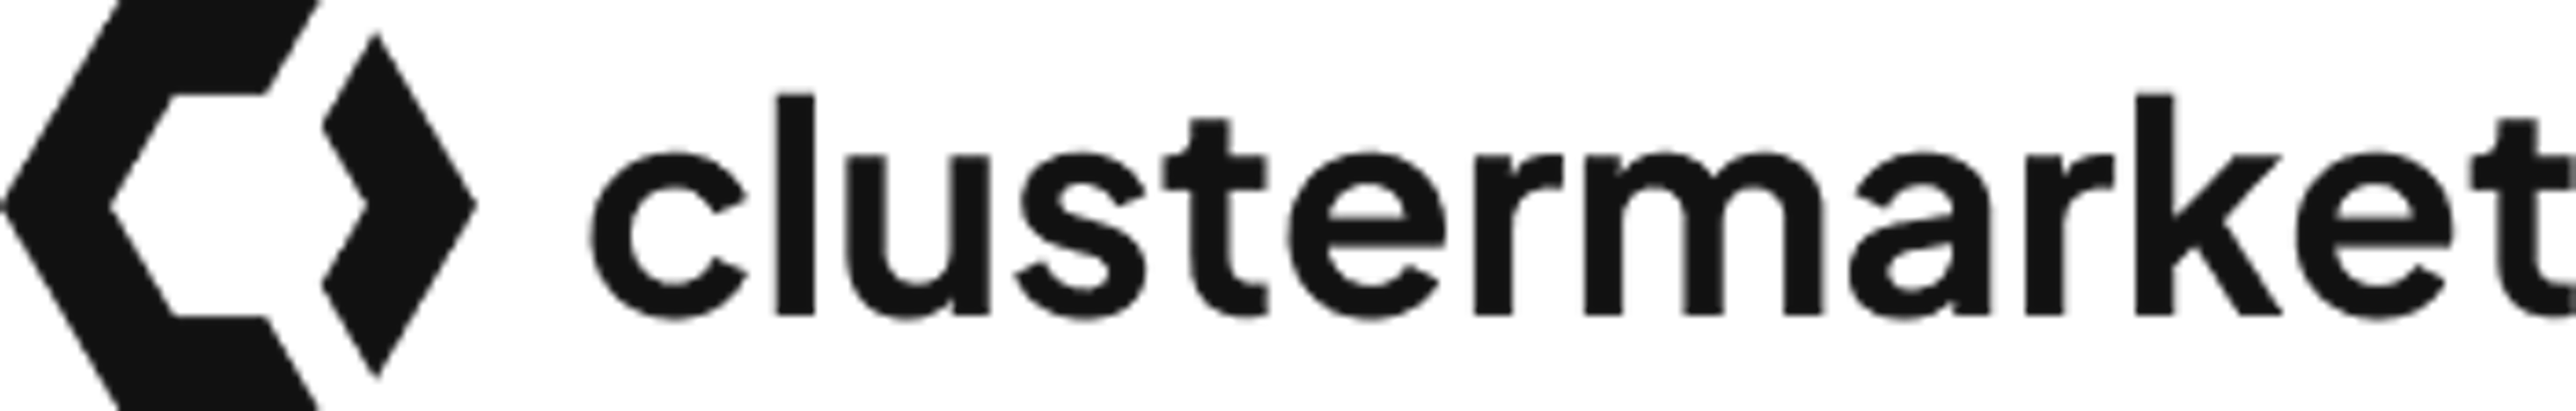 Clustermarket Logo